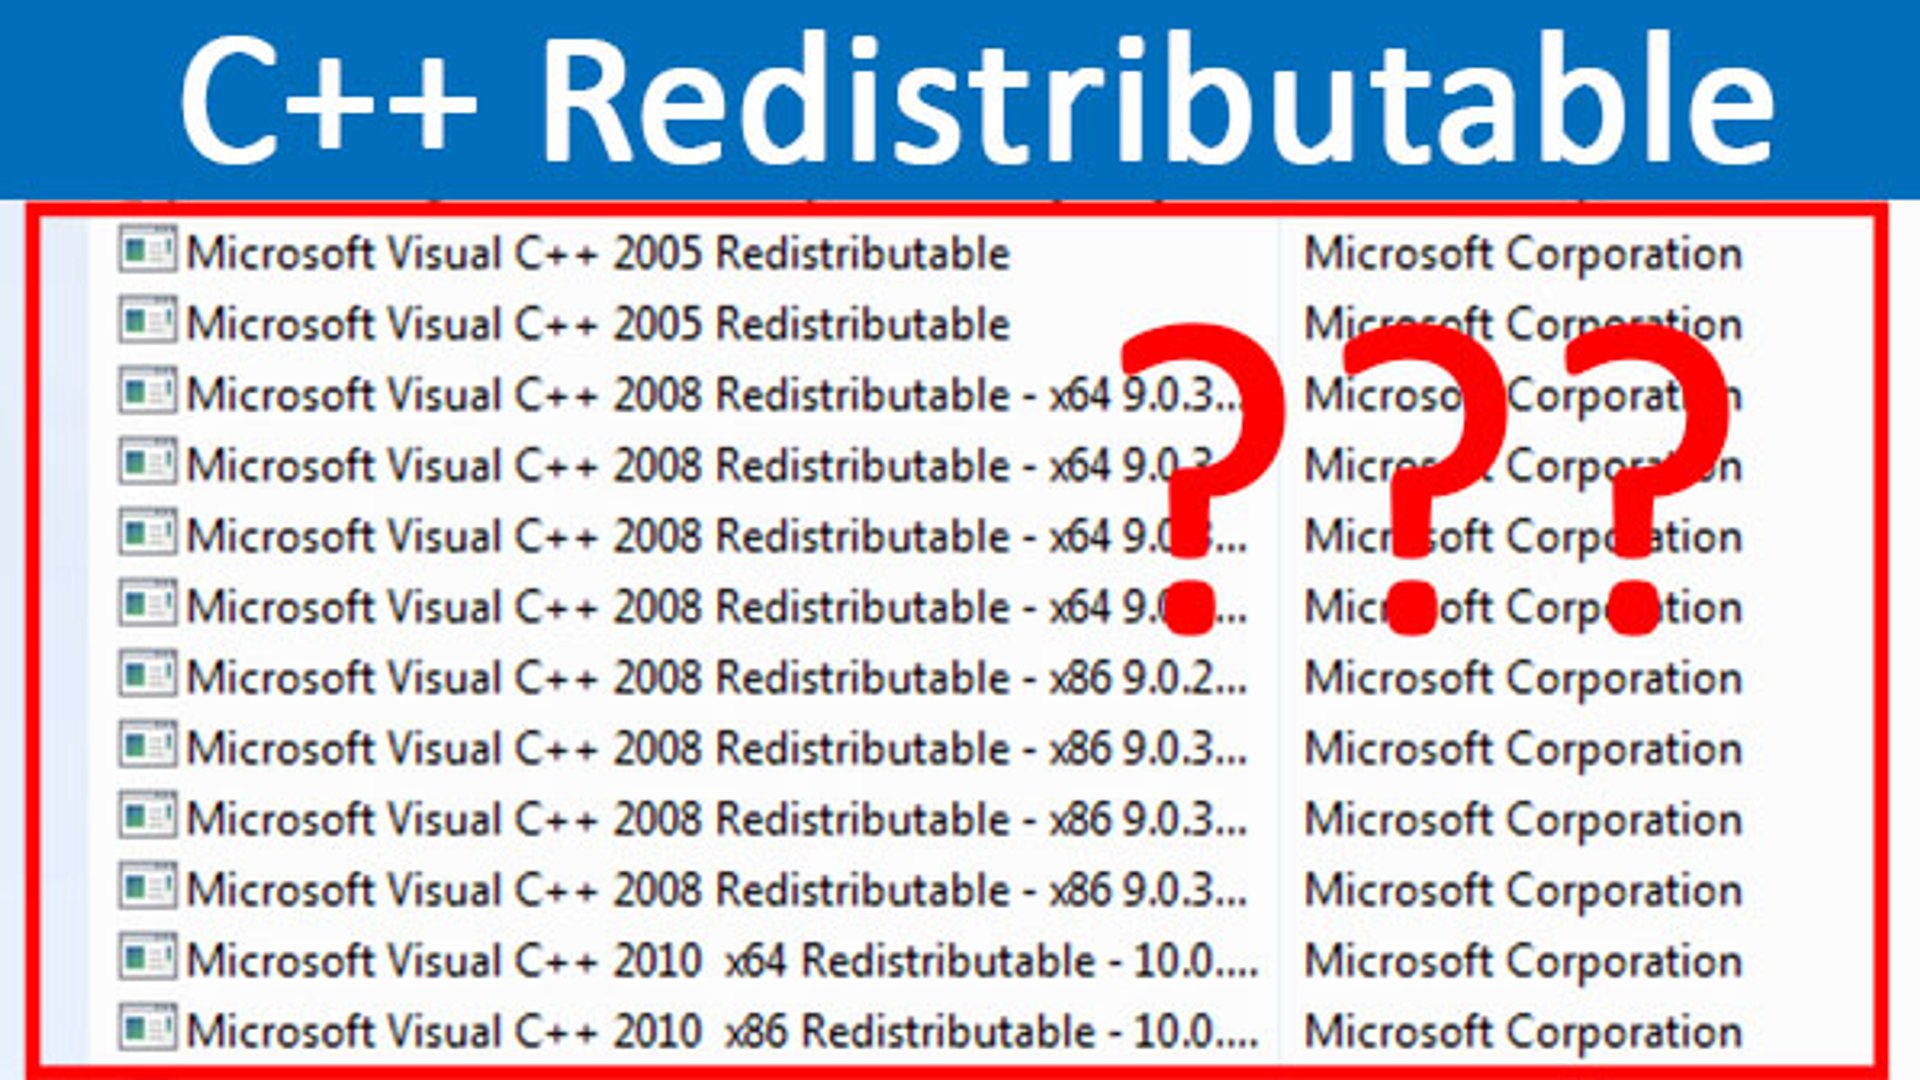 C redistributable 2012 x86. Microsoft Visual c++ 2012 Redistributable (x86) - 11.0.61030. C++ Redistributable 2012. Redistributable.